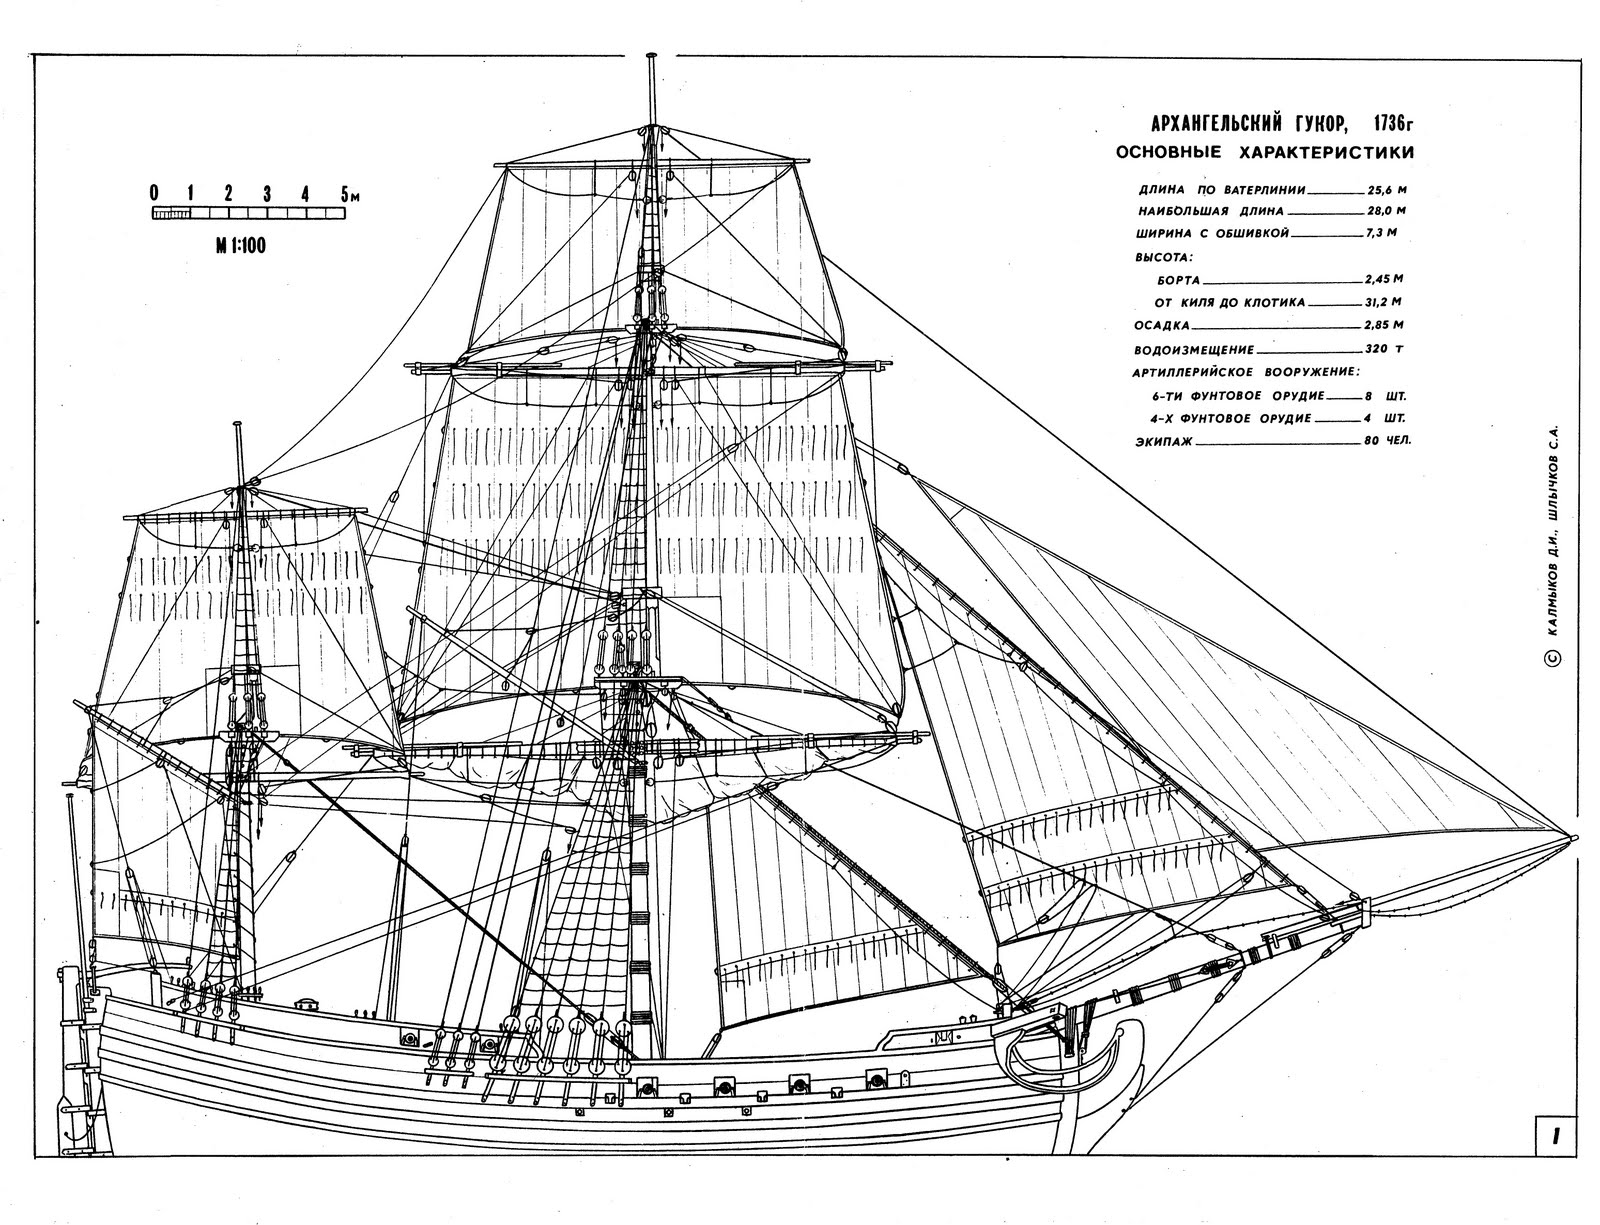 model ship blueprints